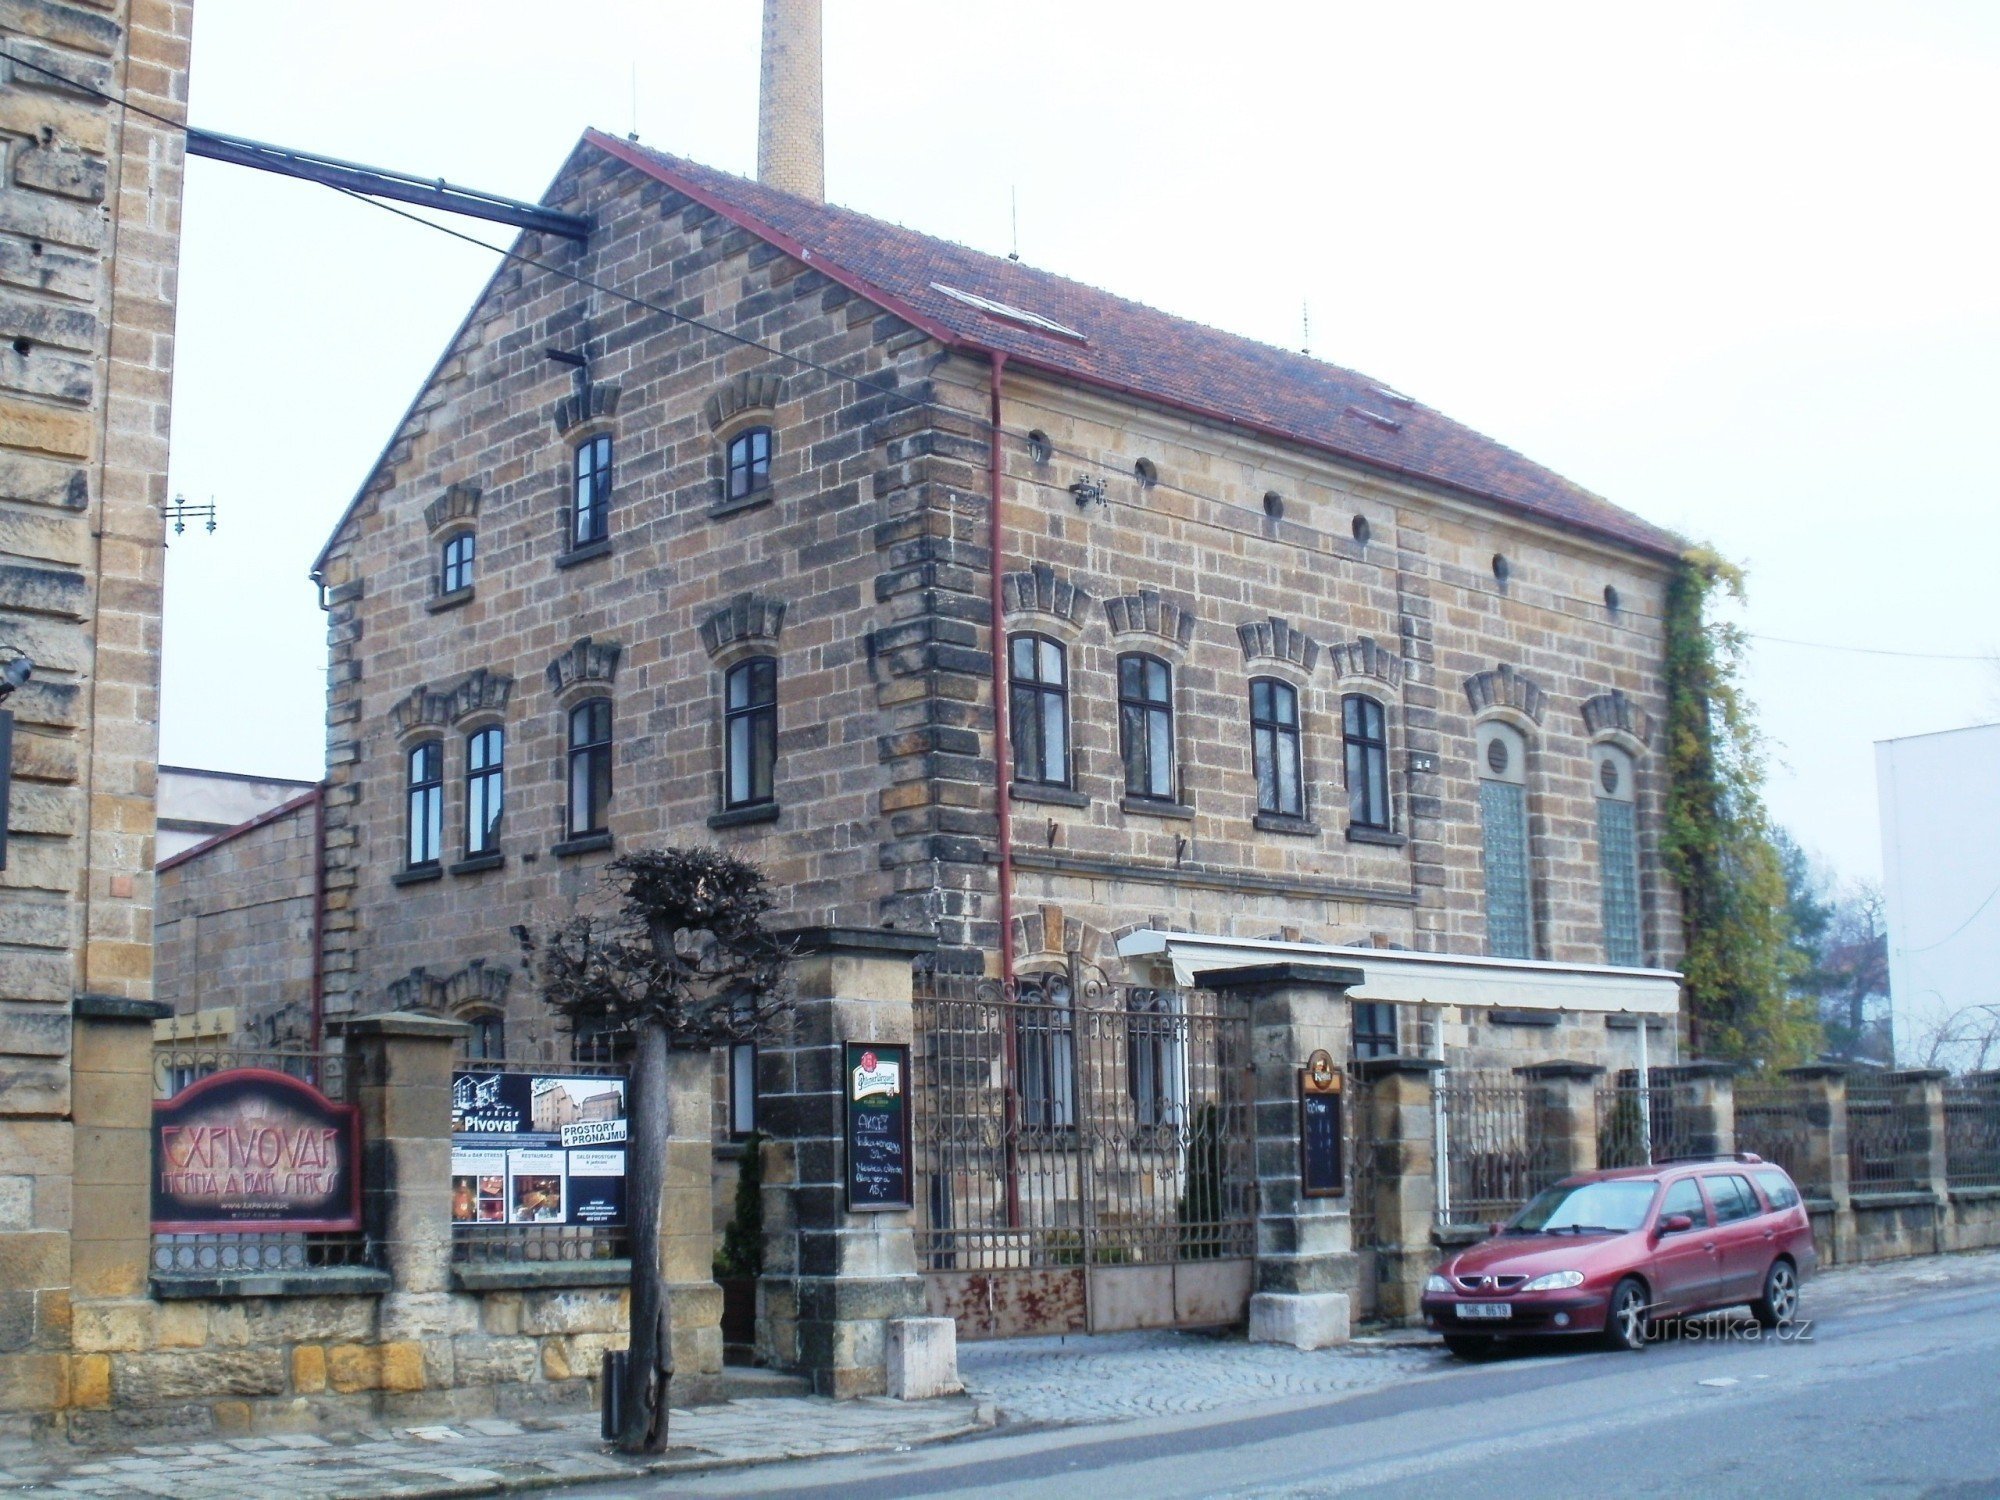 Hořice - Expivovar (tidigare bryggeri)